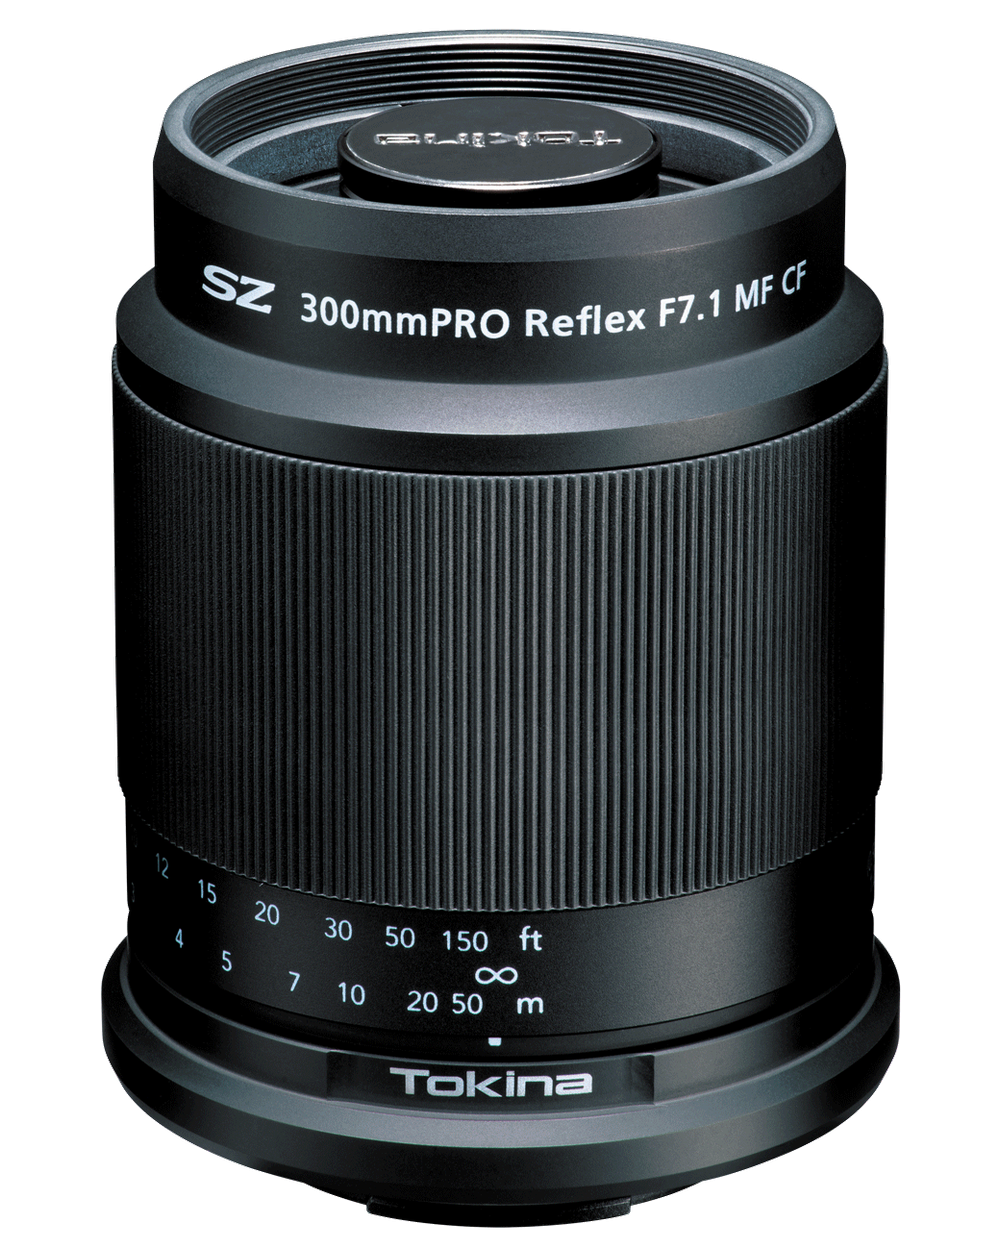 Объектив Tokina SZ 300mmPRO Reflex F7.1 MF CF для Canon EF-M